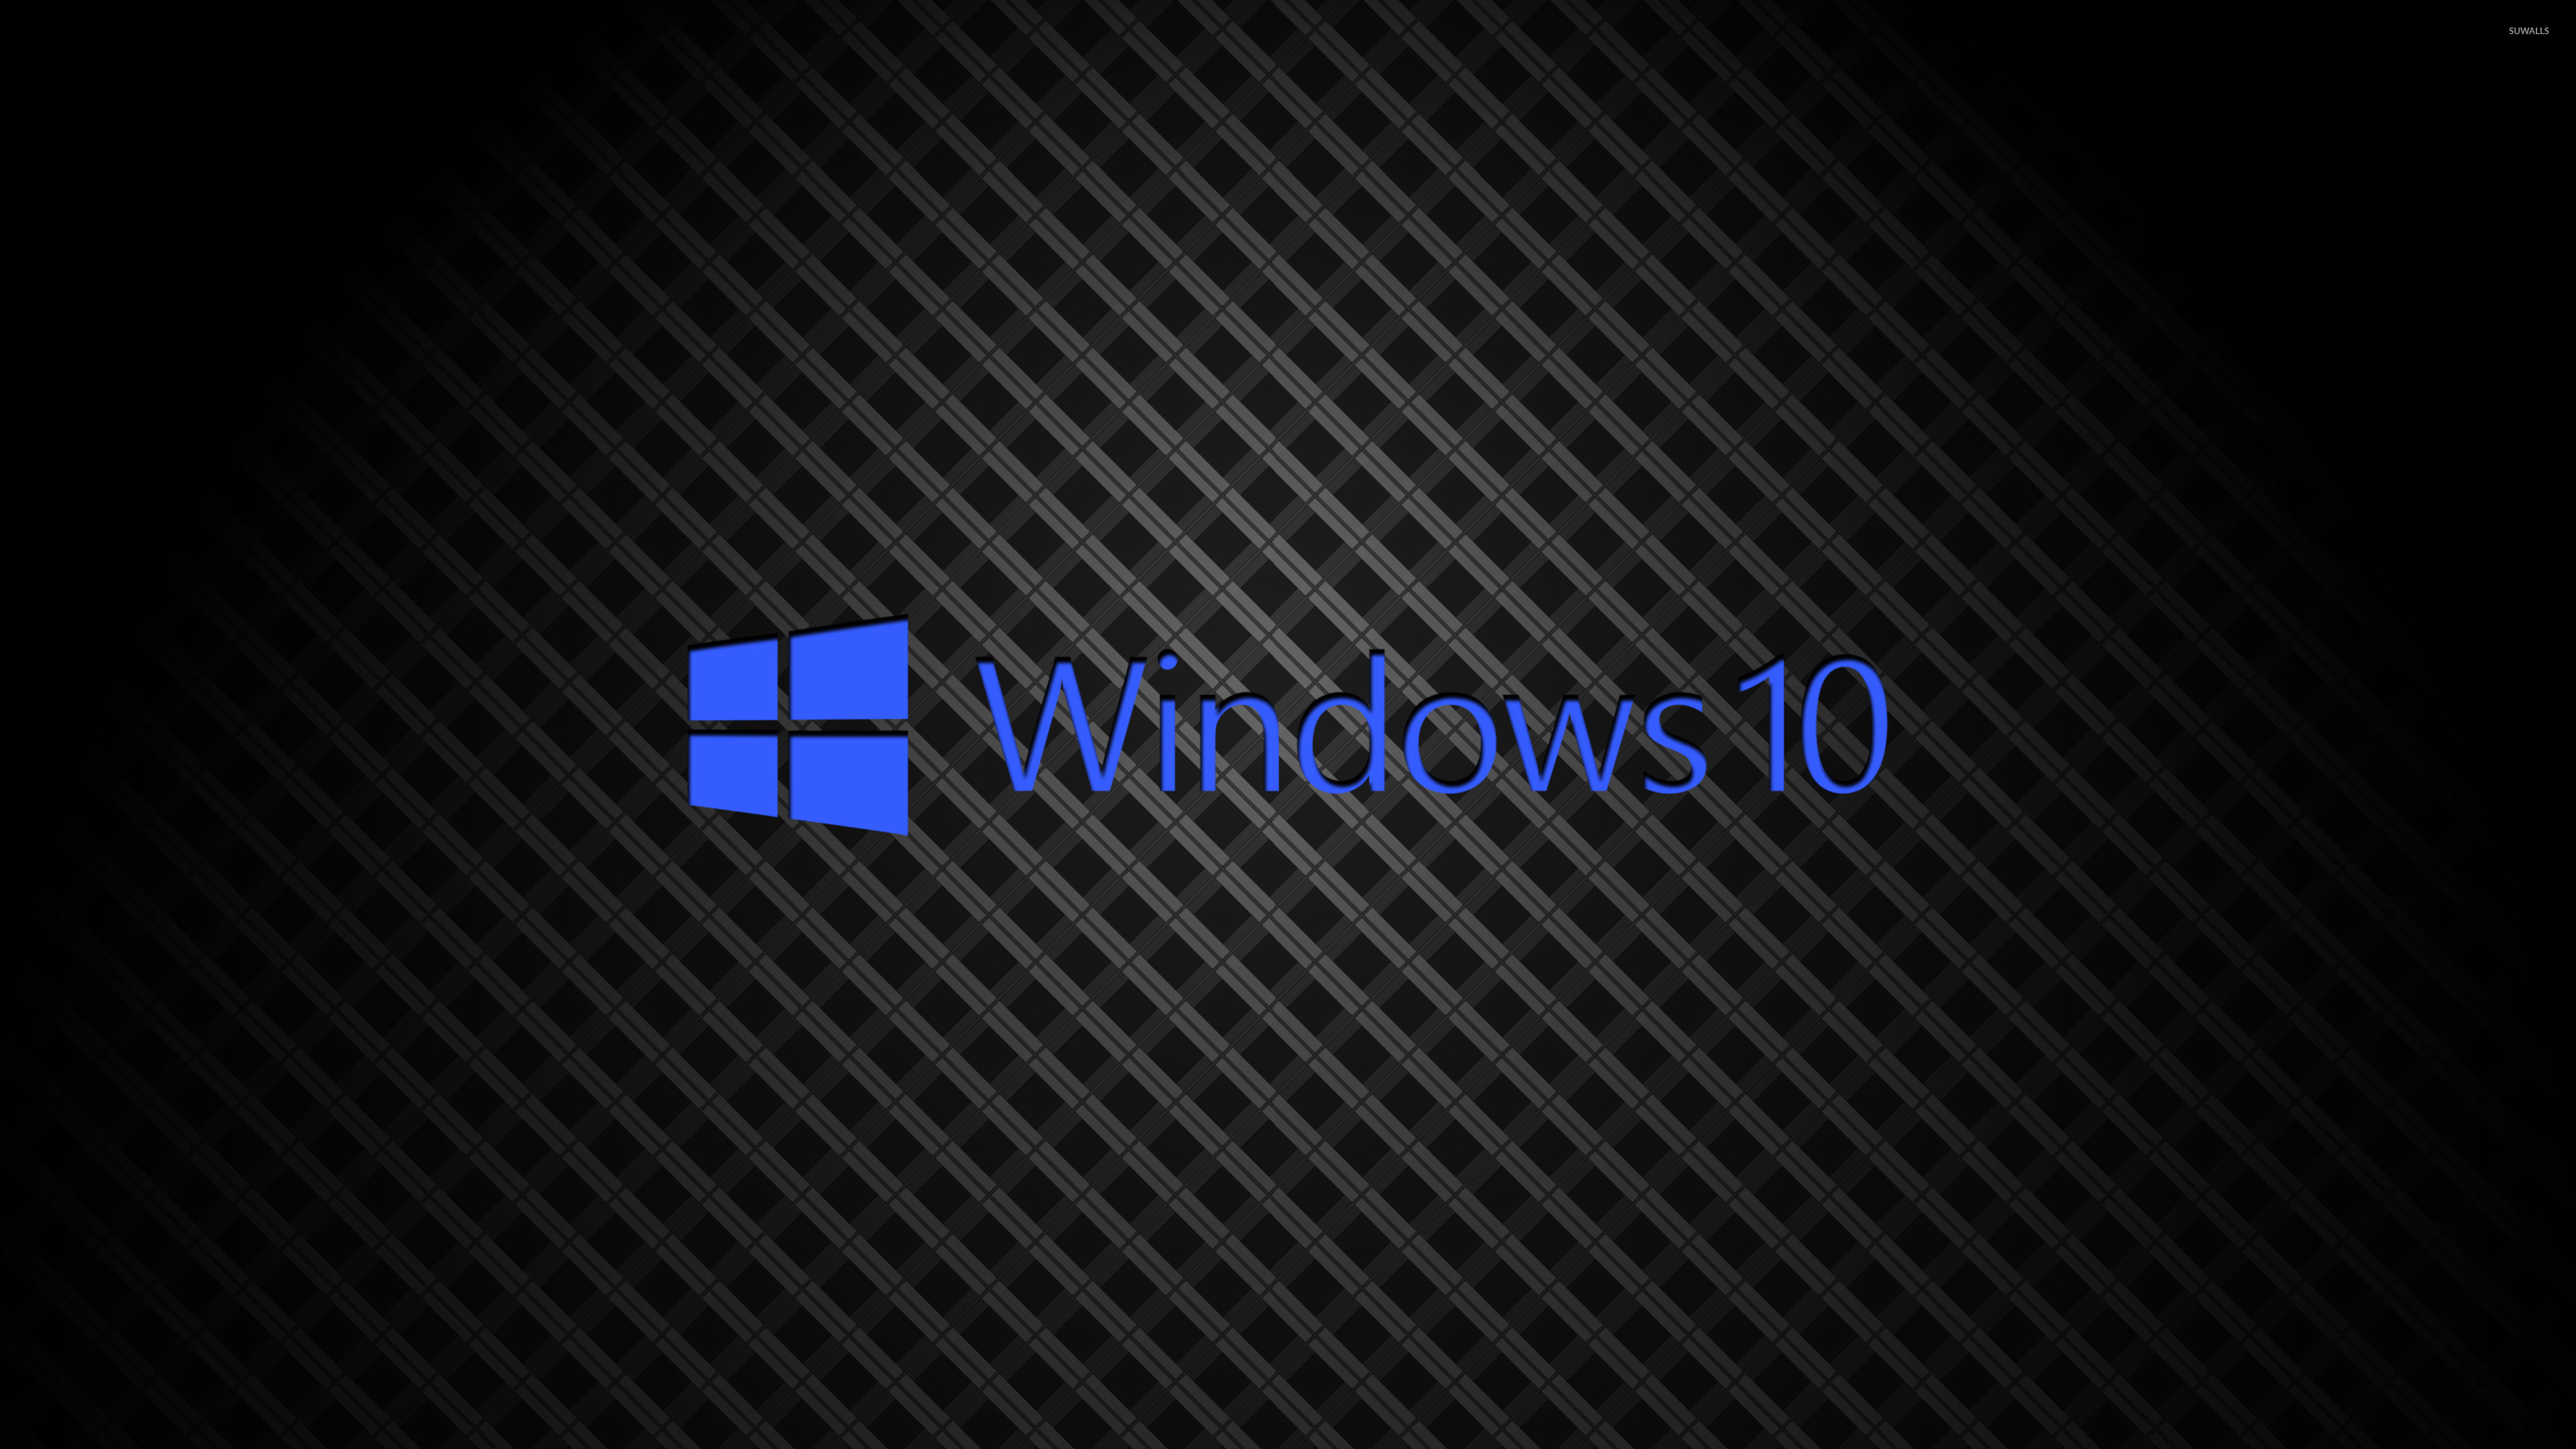 Windows 10 on square pattern blue text logo wallpaper wallpaper